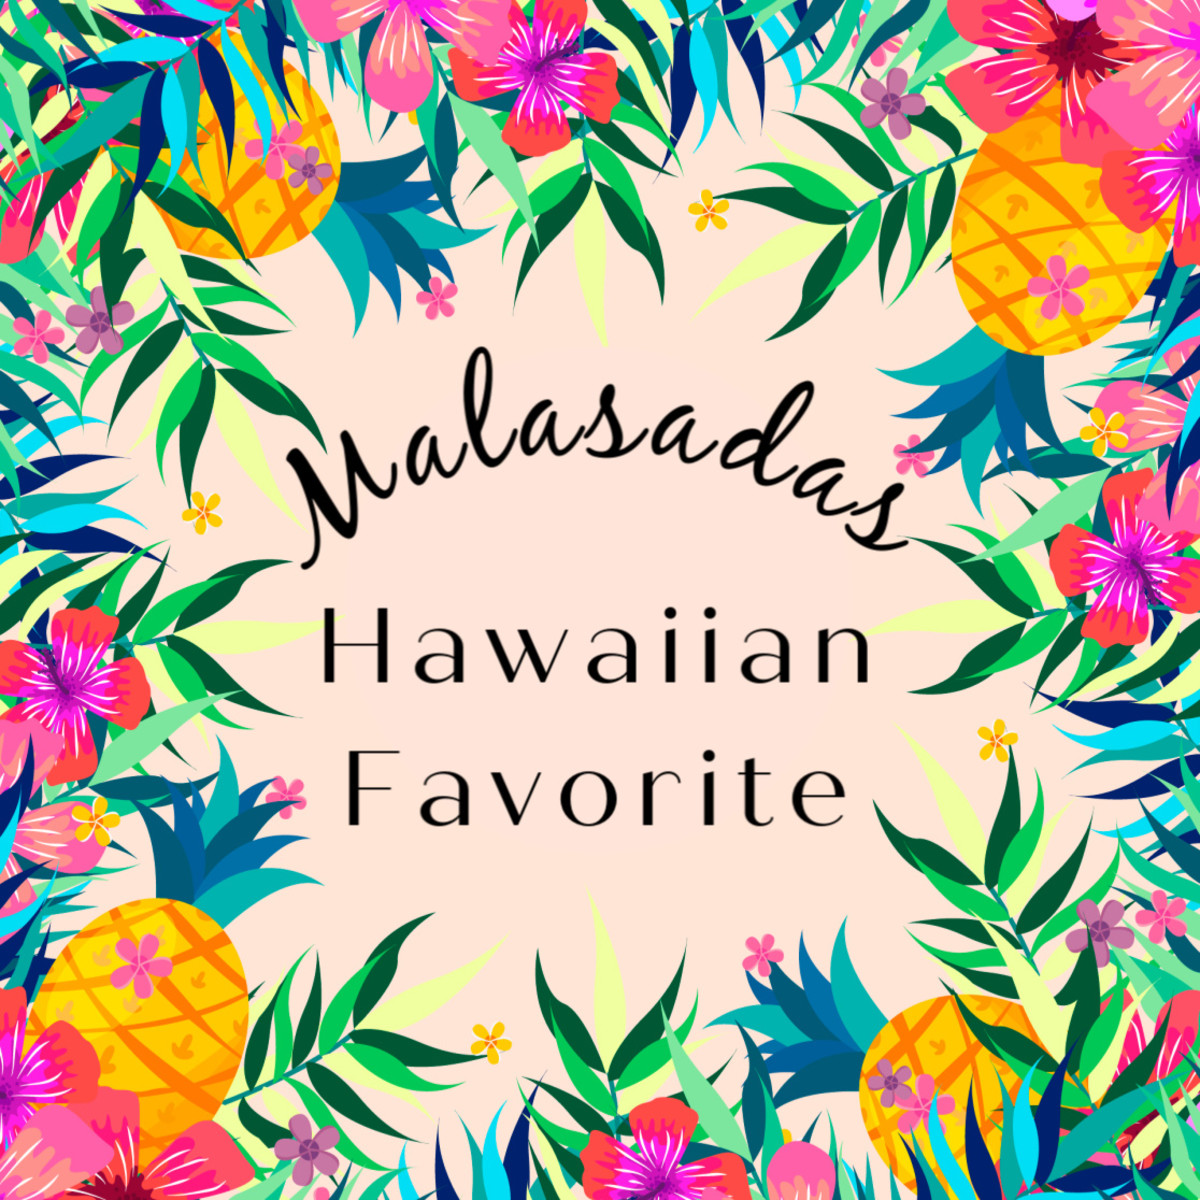 hawaiian-favorites-malasadas-the-portuguese-doughnut-recipe